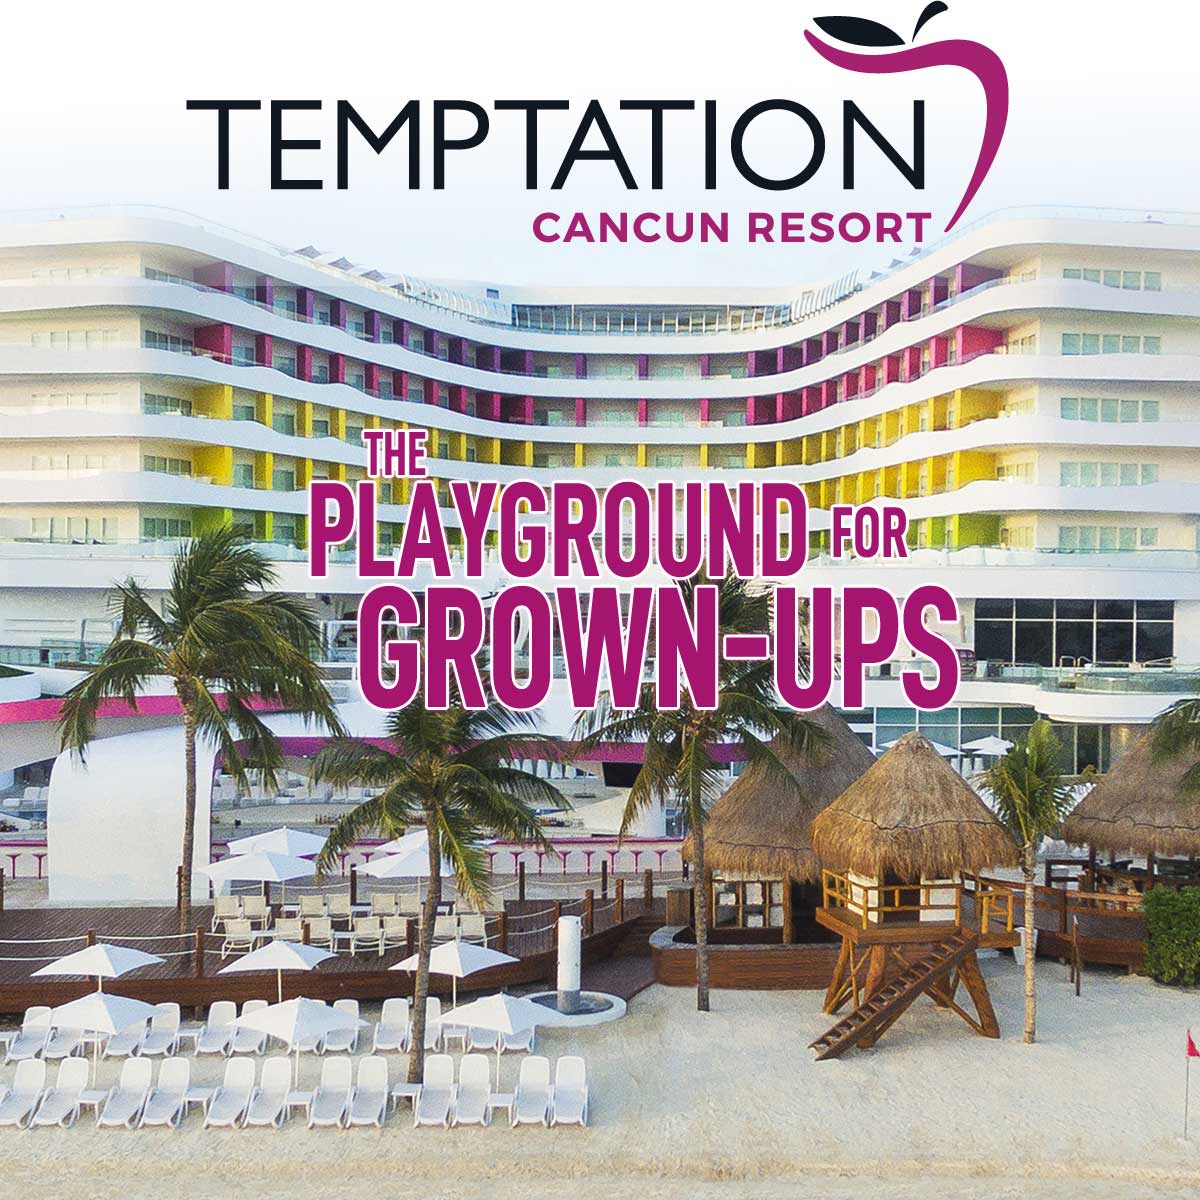 Temptation Cancun's Amenities.